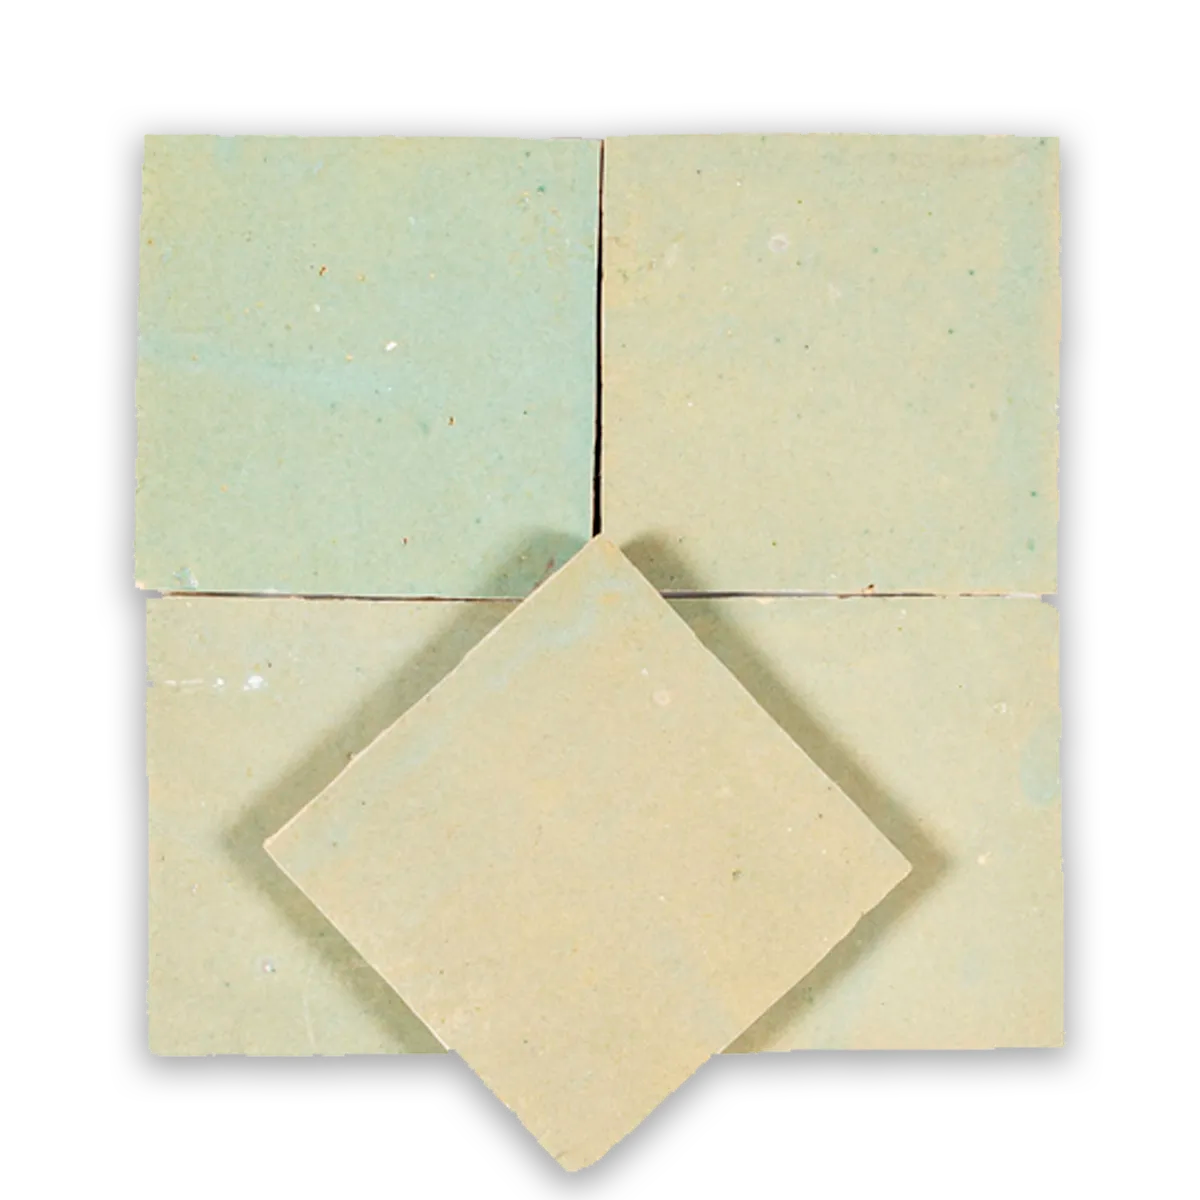 Oliva Zellige Ceramic Wall Tile 4x4